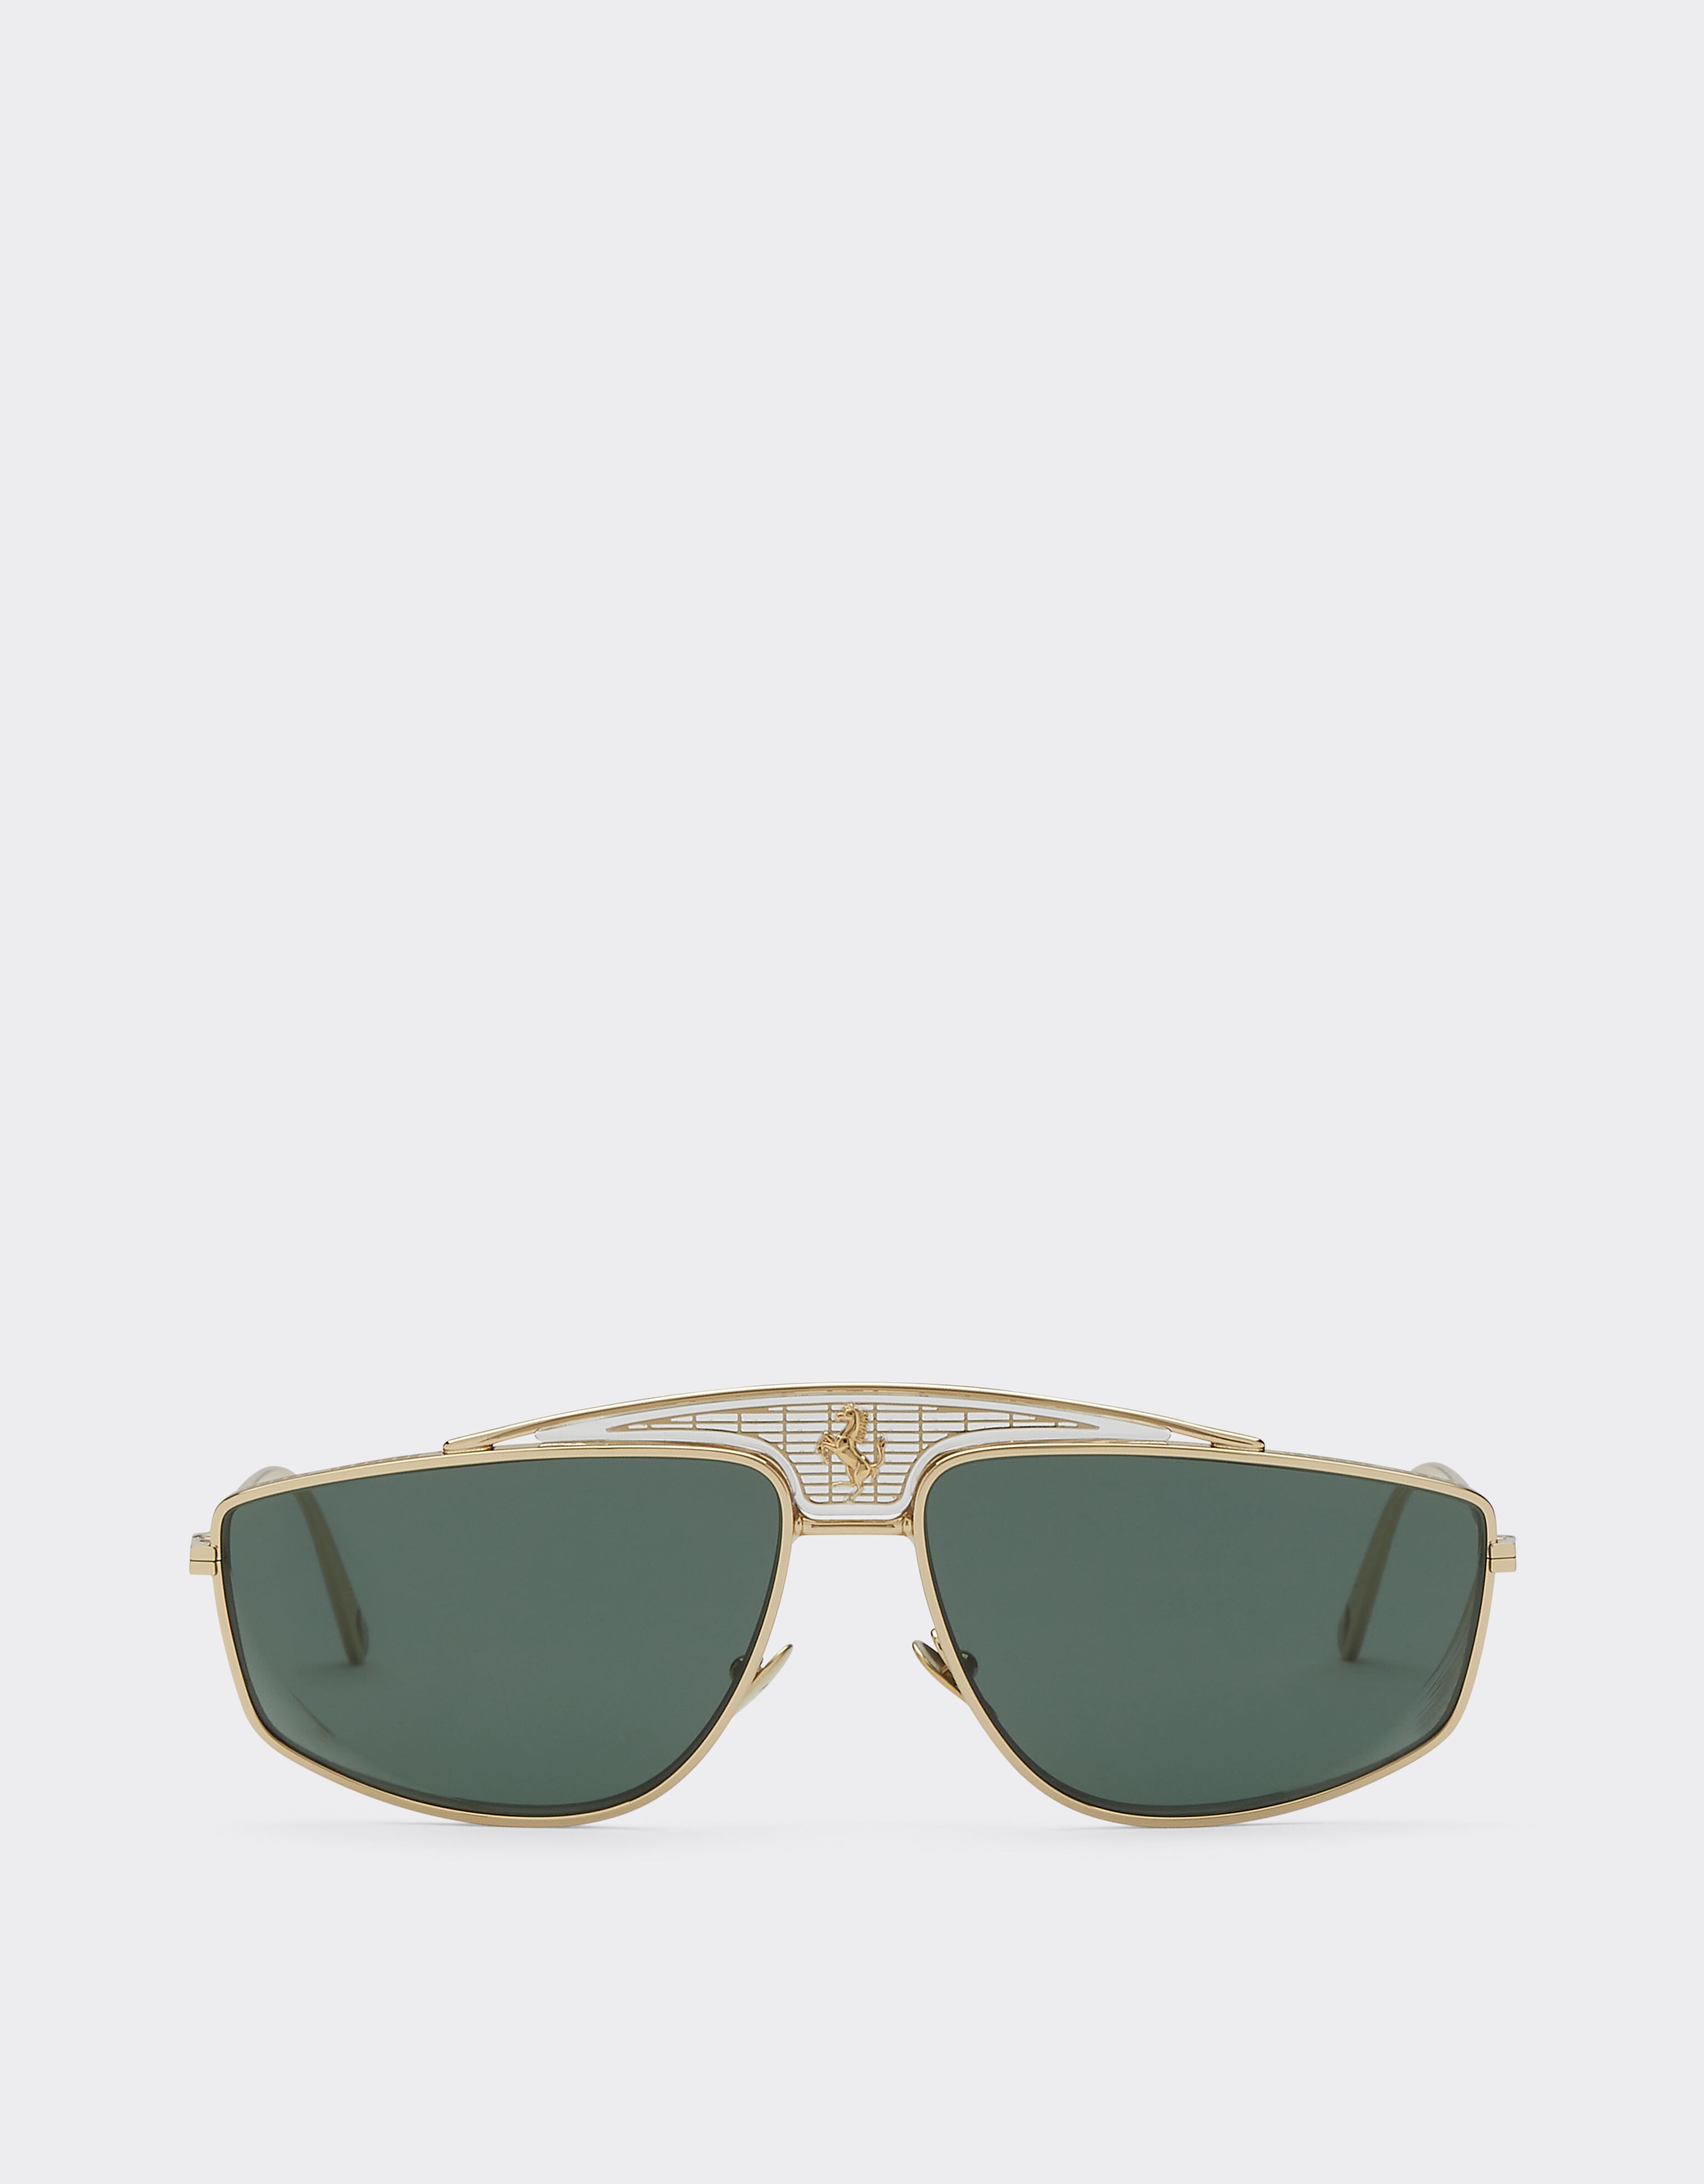 Ferrari Ferrari sunglasses with dark green lenses Silver F1247f